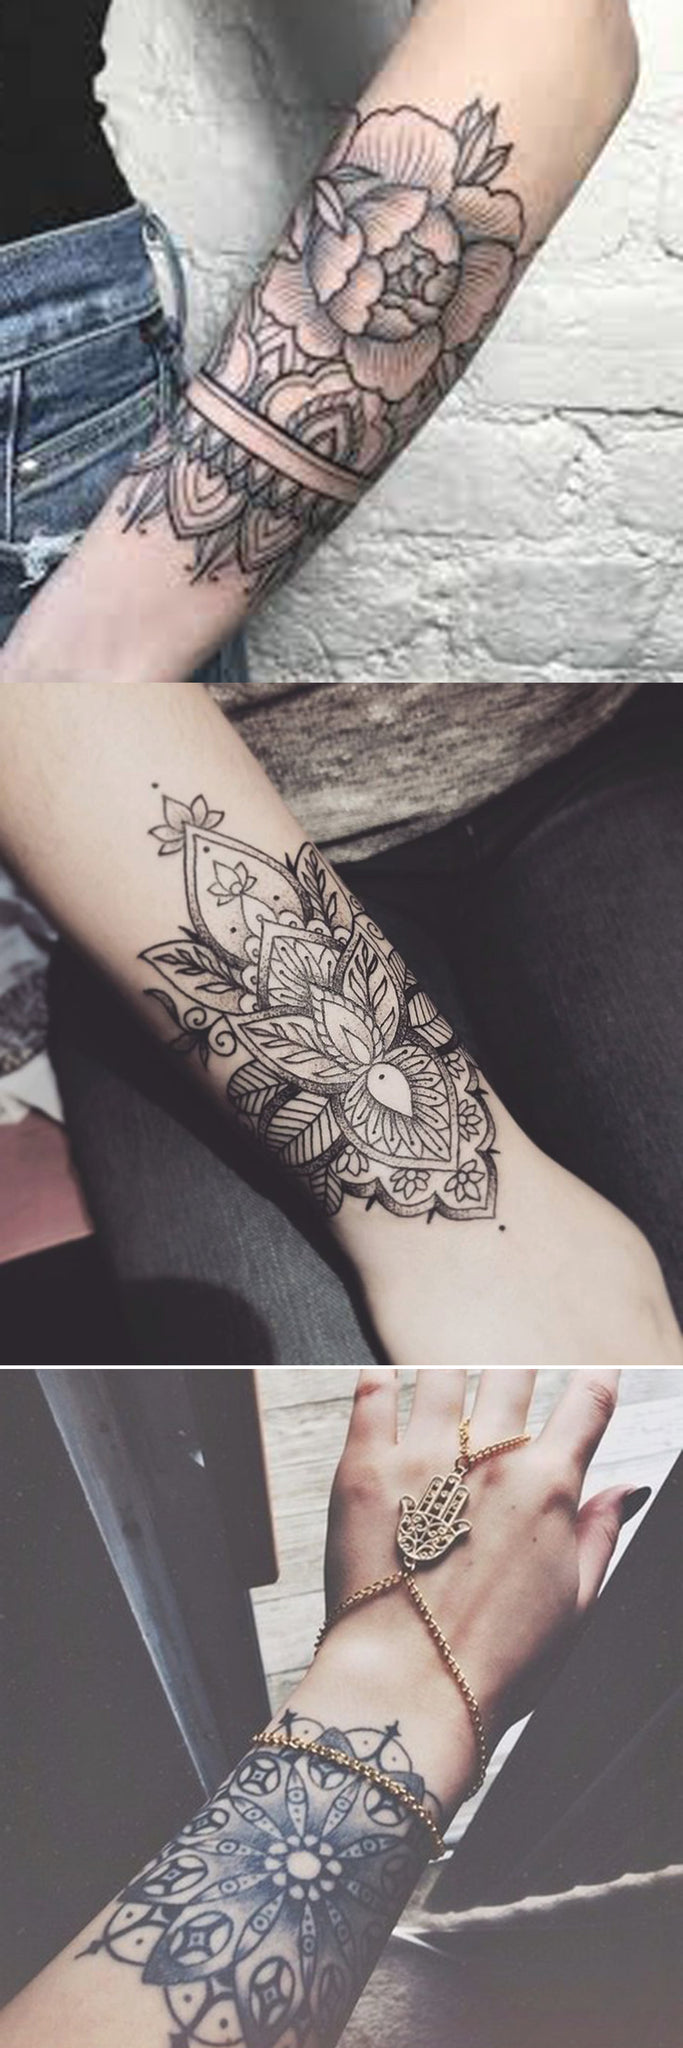 Cool Mandala Arm Band Tattoo Ideas for Women - Wrist Floral Flower Lotus Tatt - MyBodiArt.com